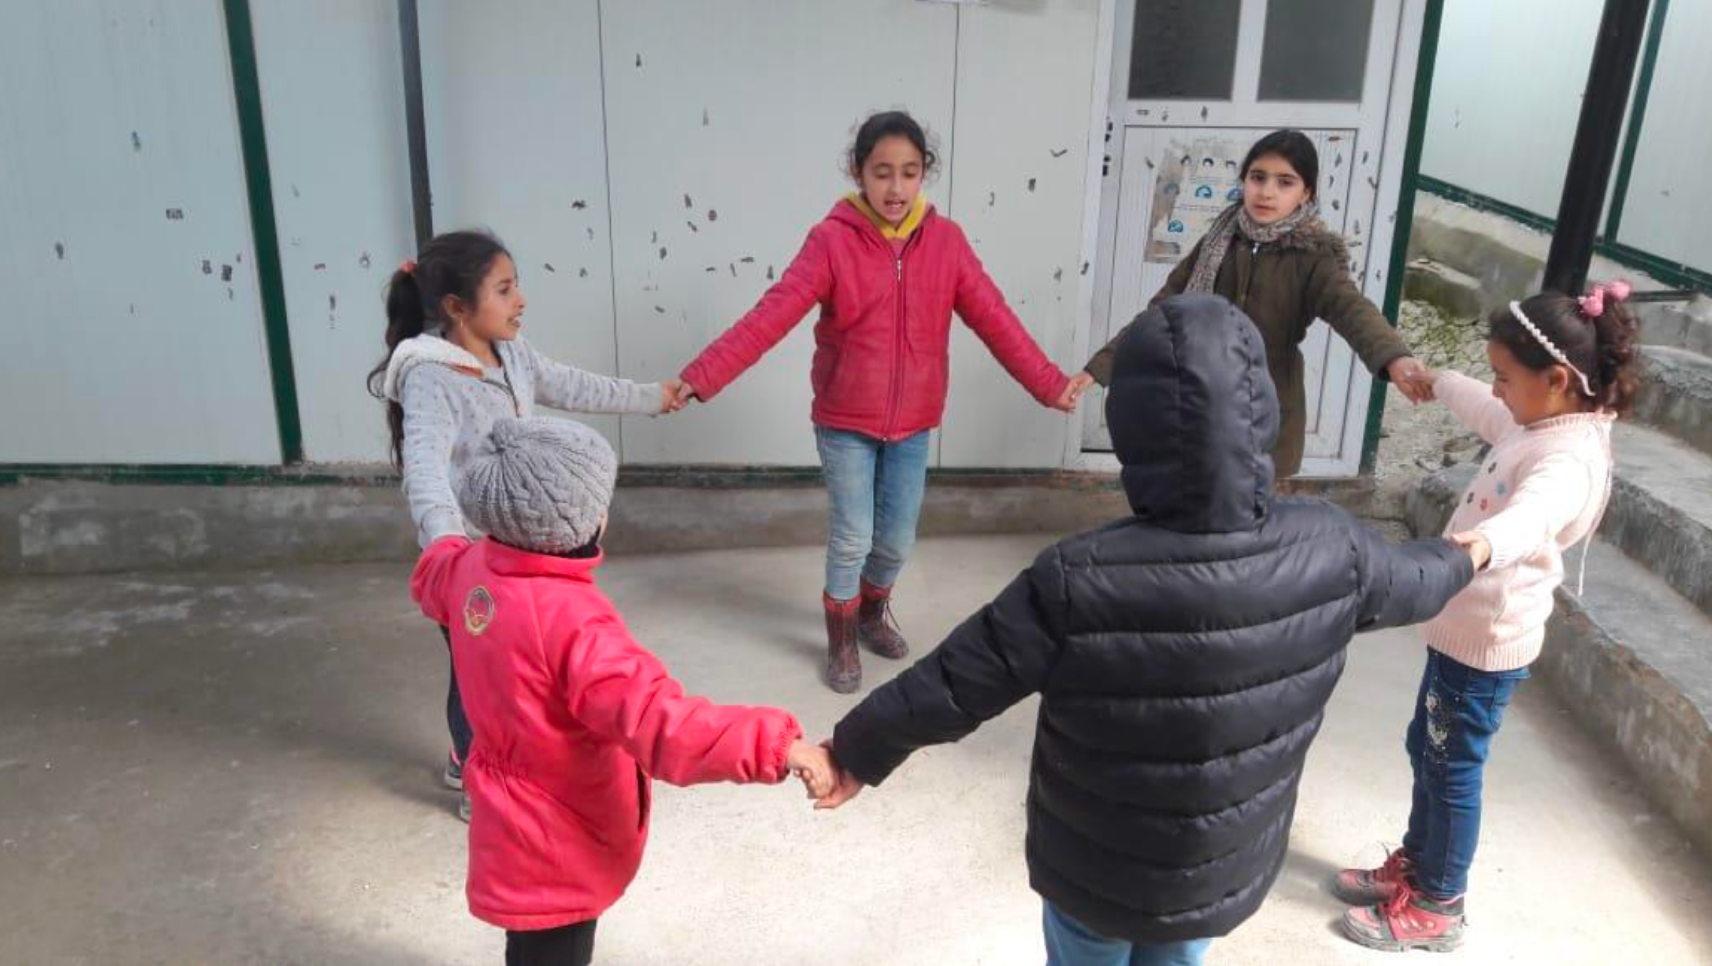 Syrian children in a circle